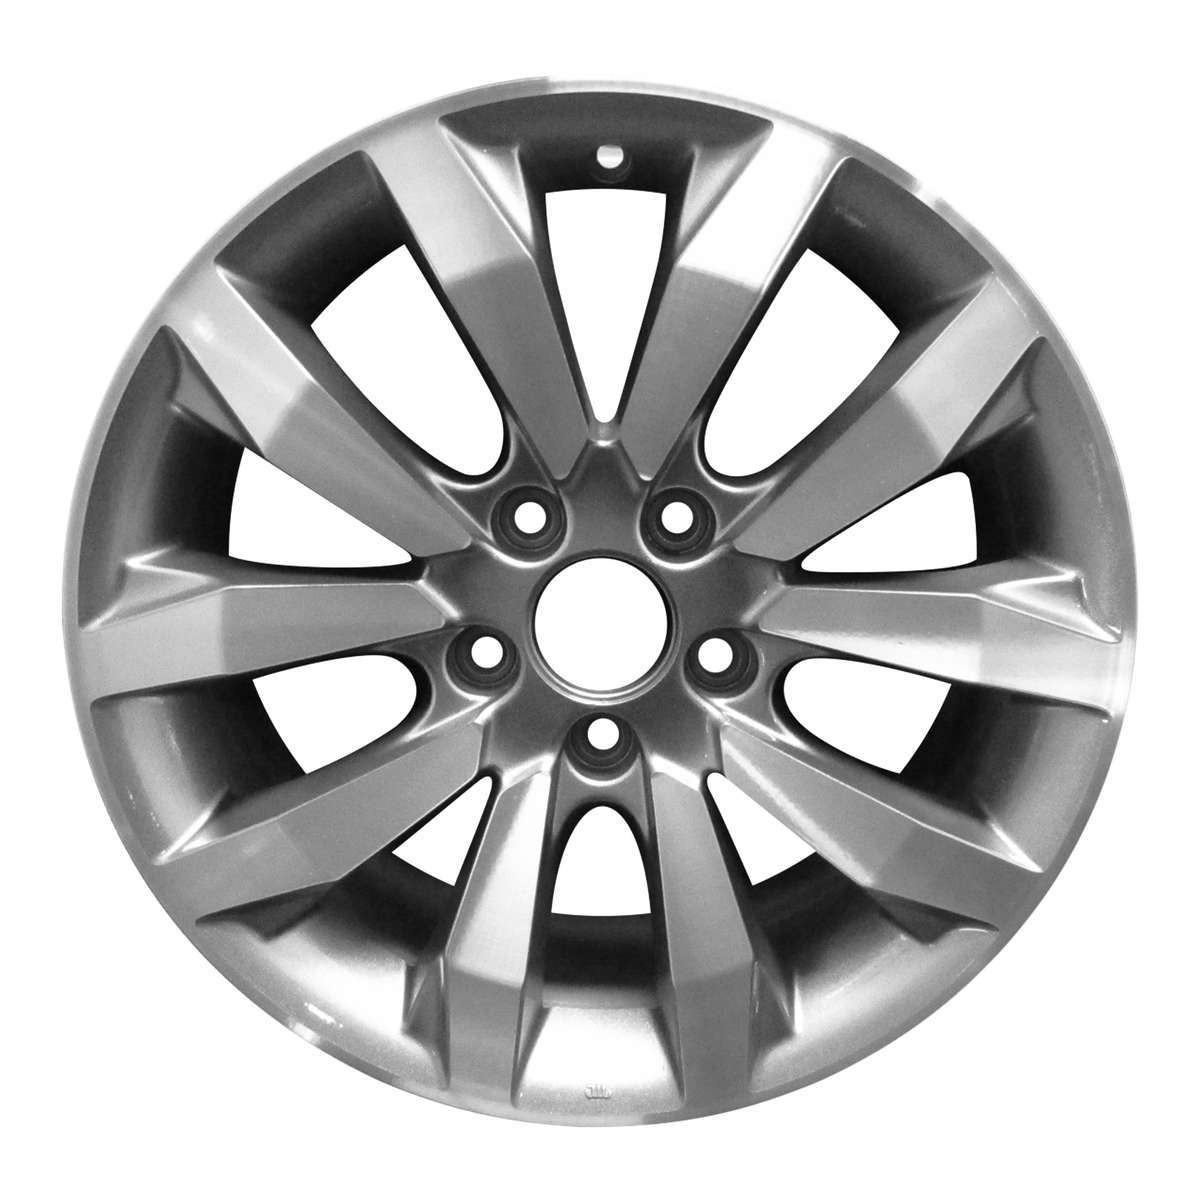 2015 Honda Civic New 17" Replacement Wheel Rim RW63996MC